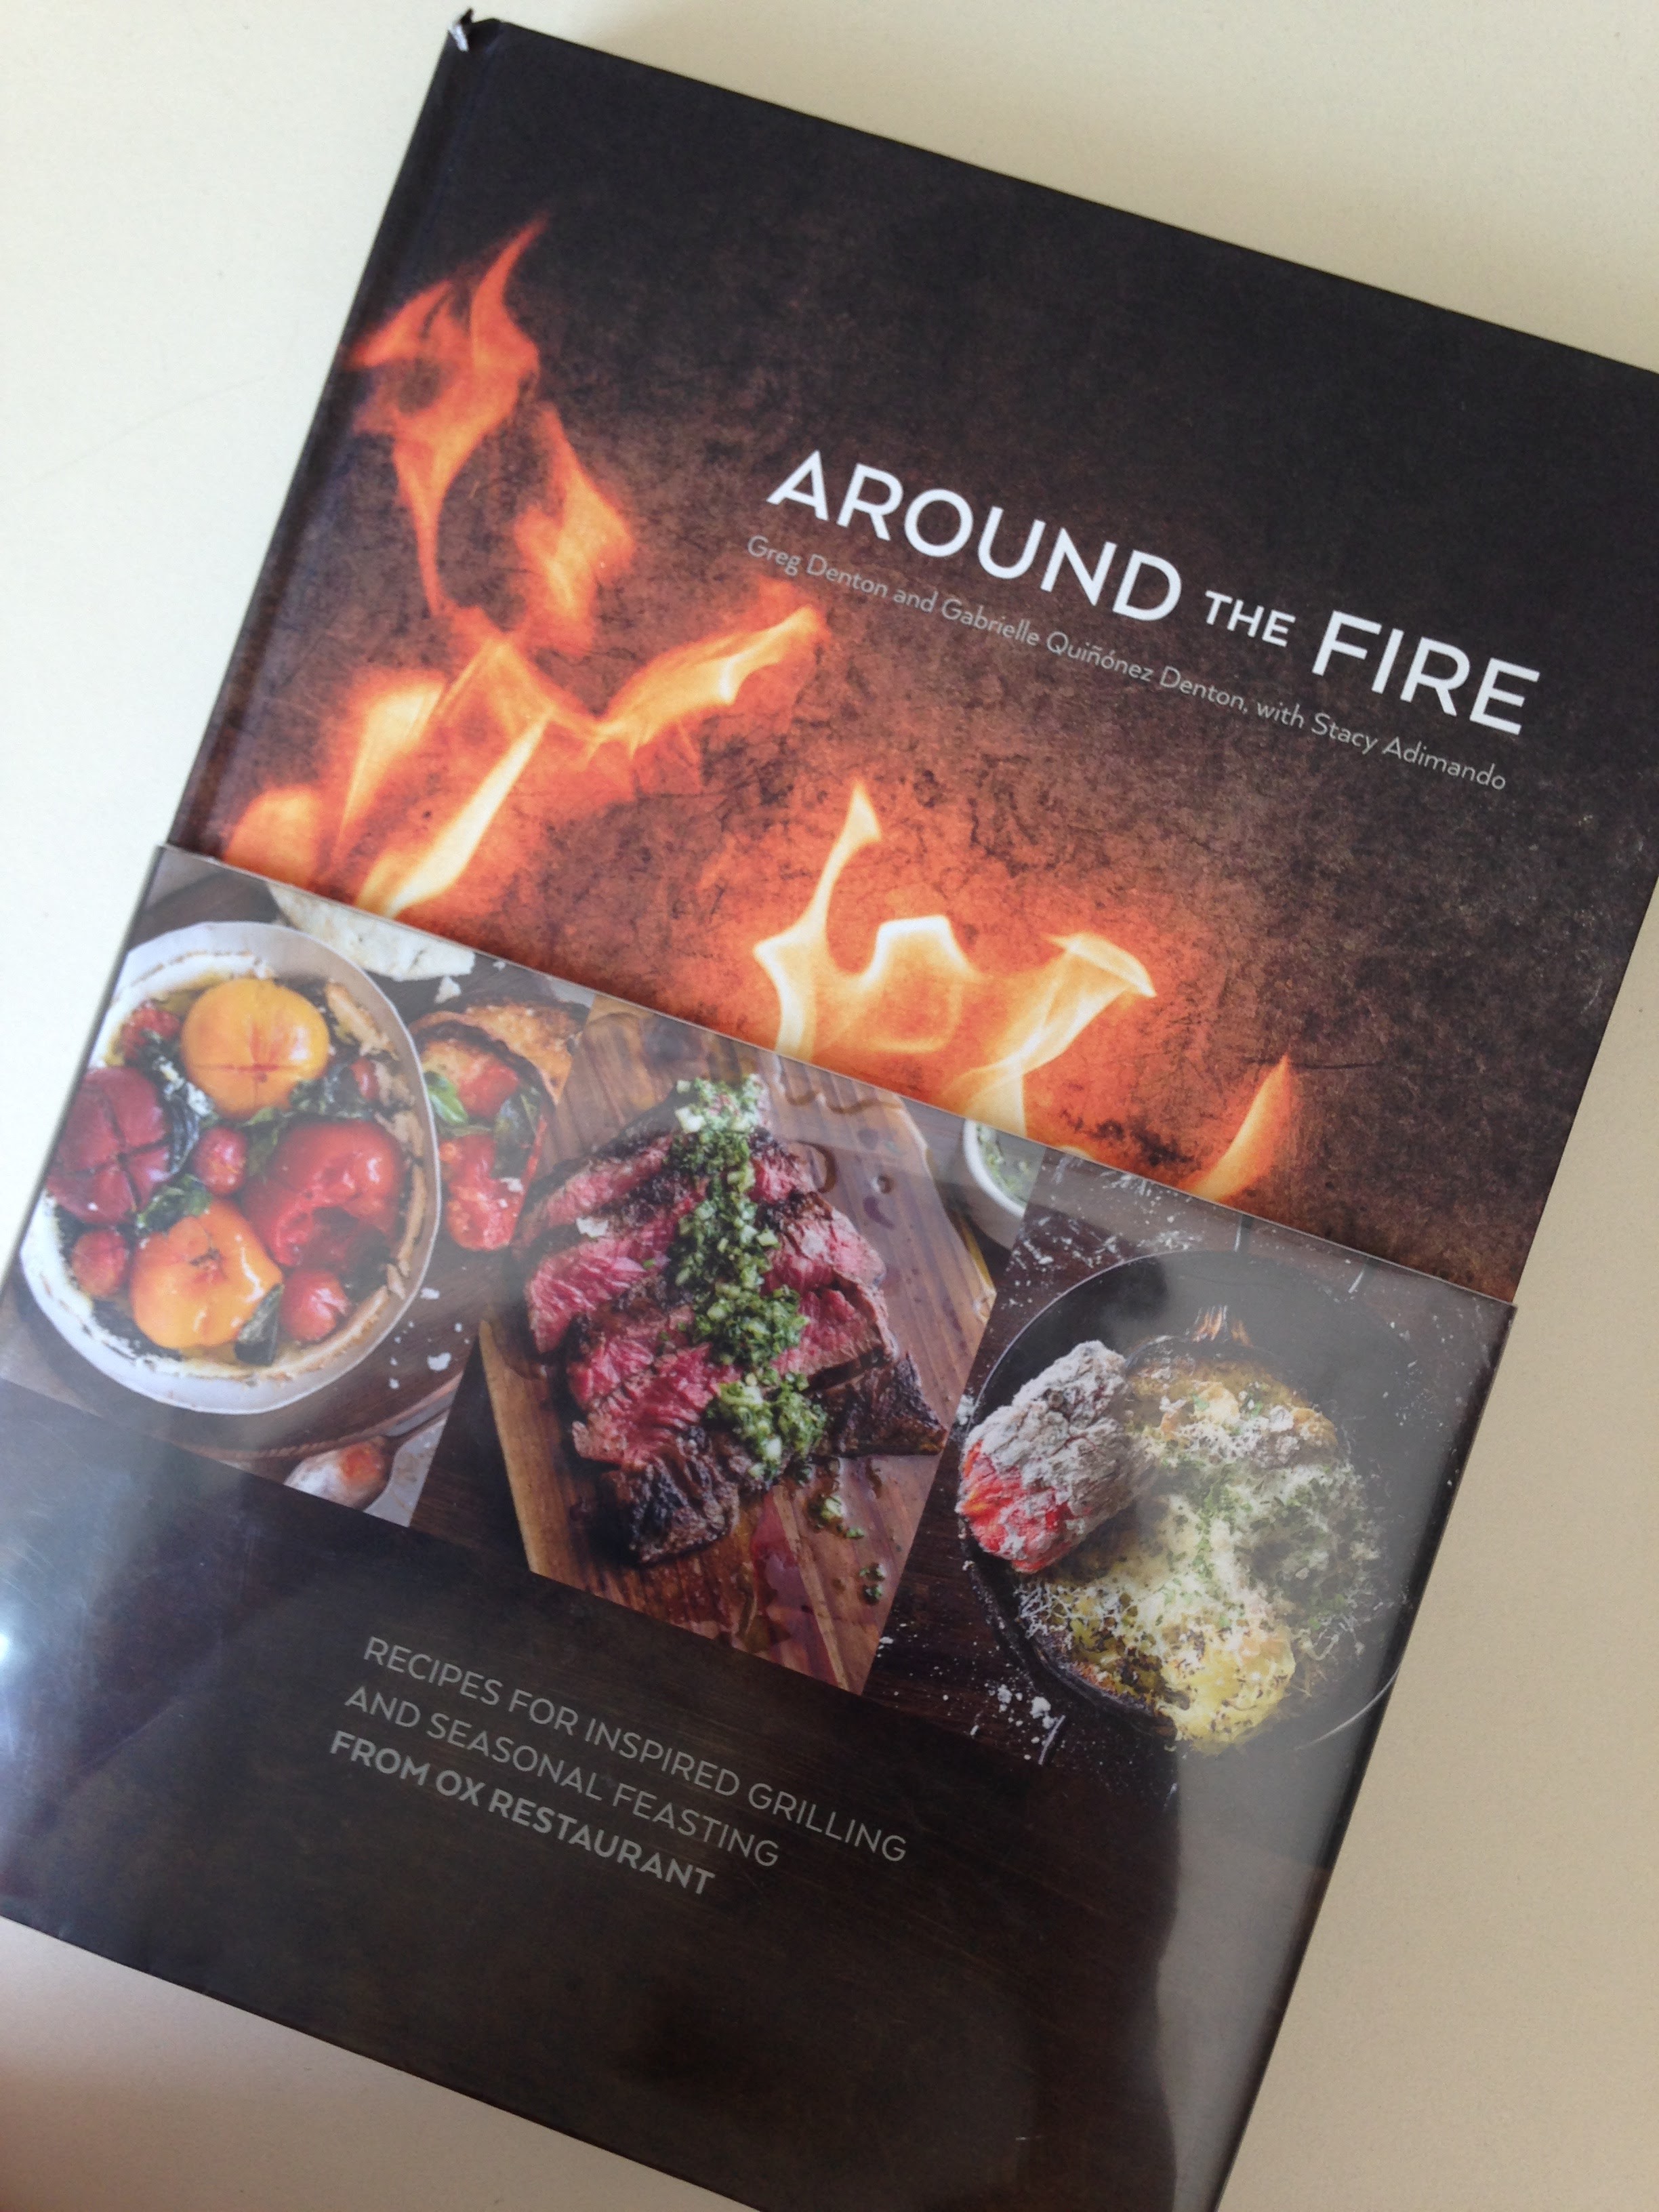 the cookbook Around the Fire by Greg Denton, Gabrielle Quinonez Denton, Stacy Adimando